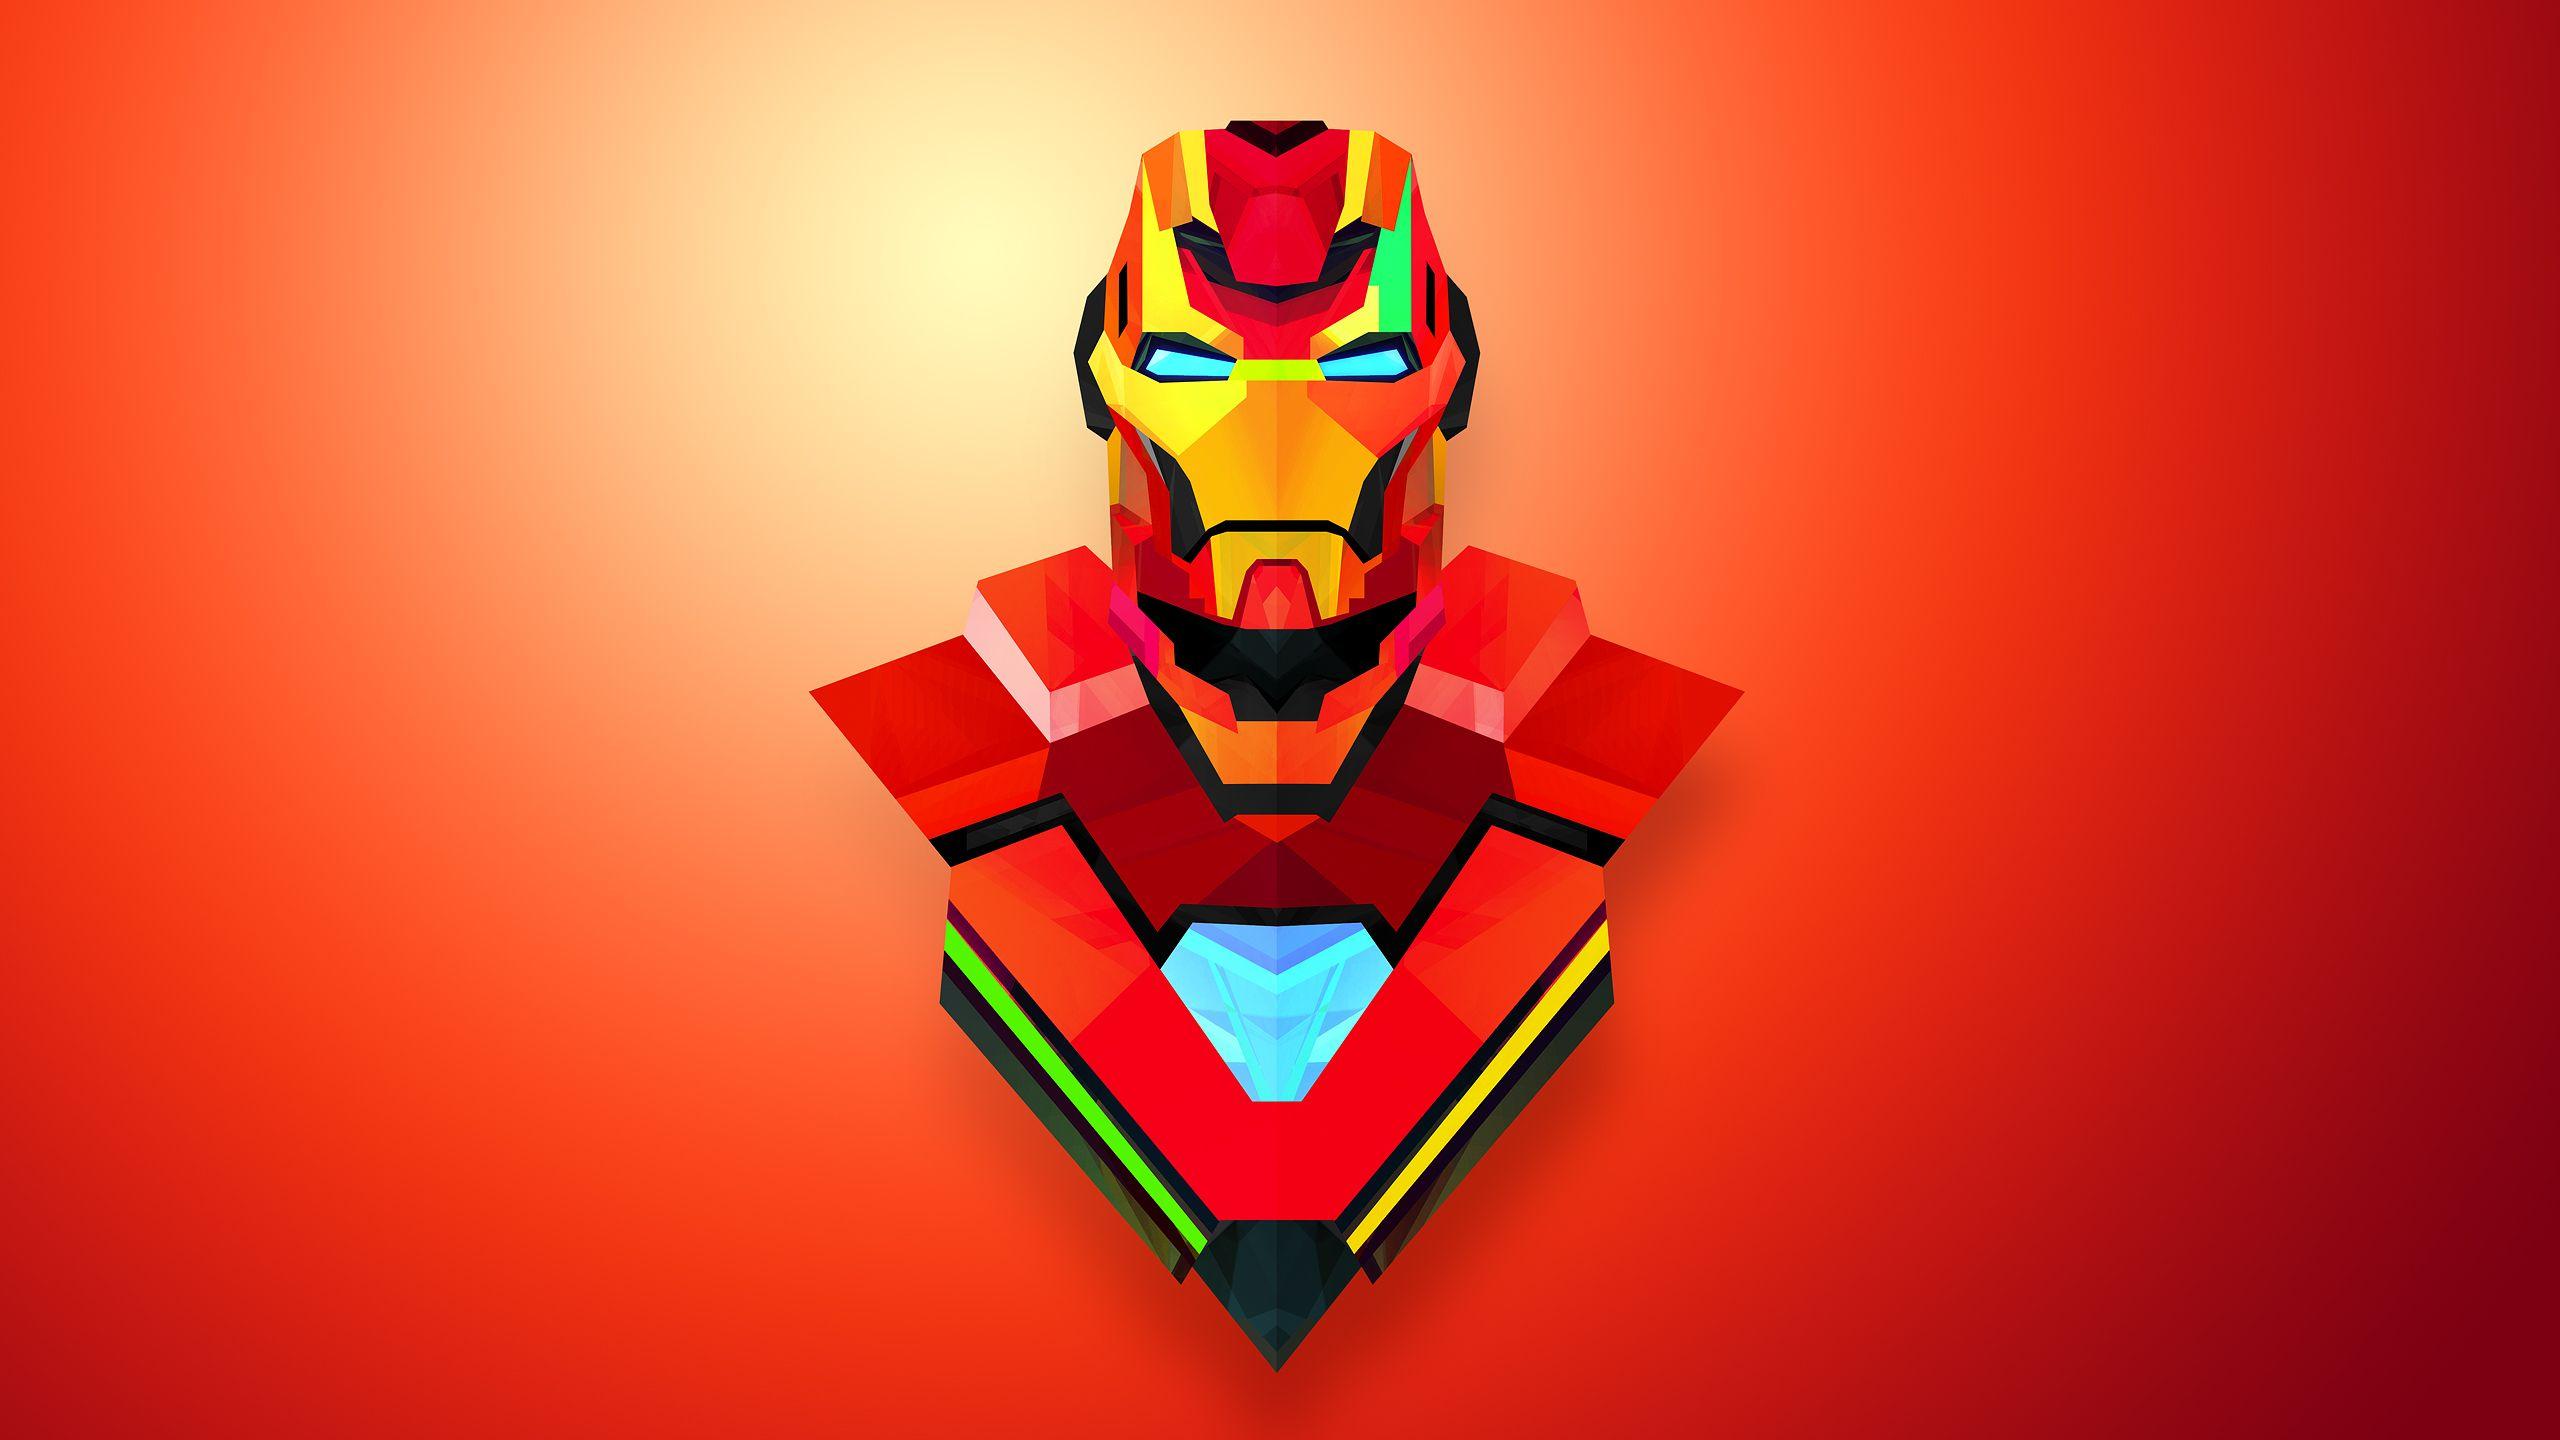 Iron Man Fan Made, HD Superheroes, 4k Wallpaper, Image